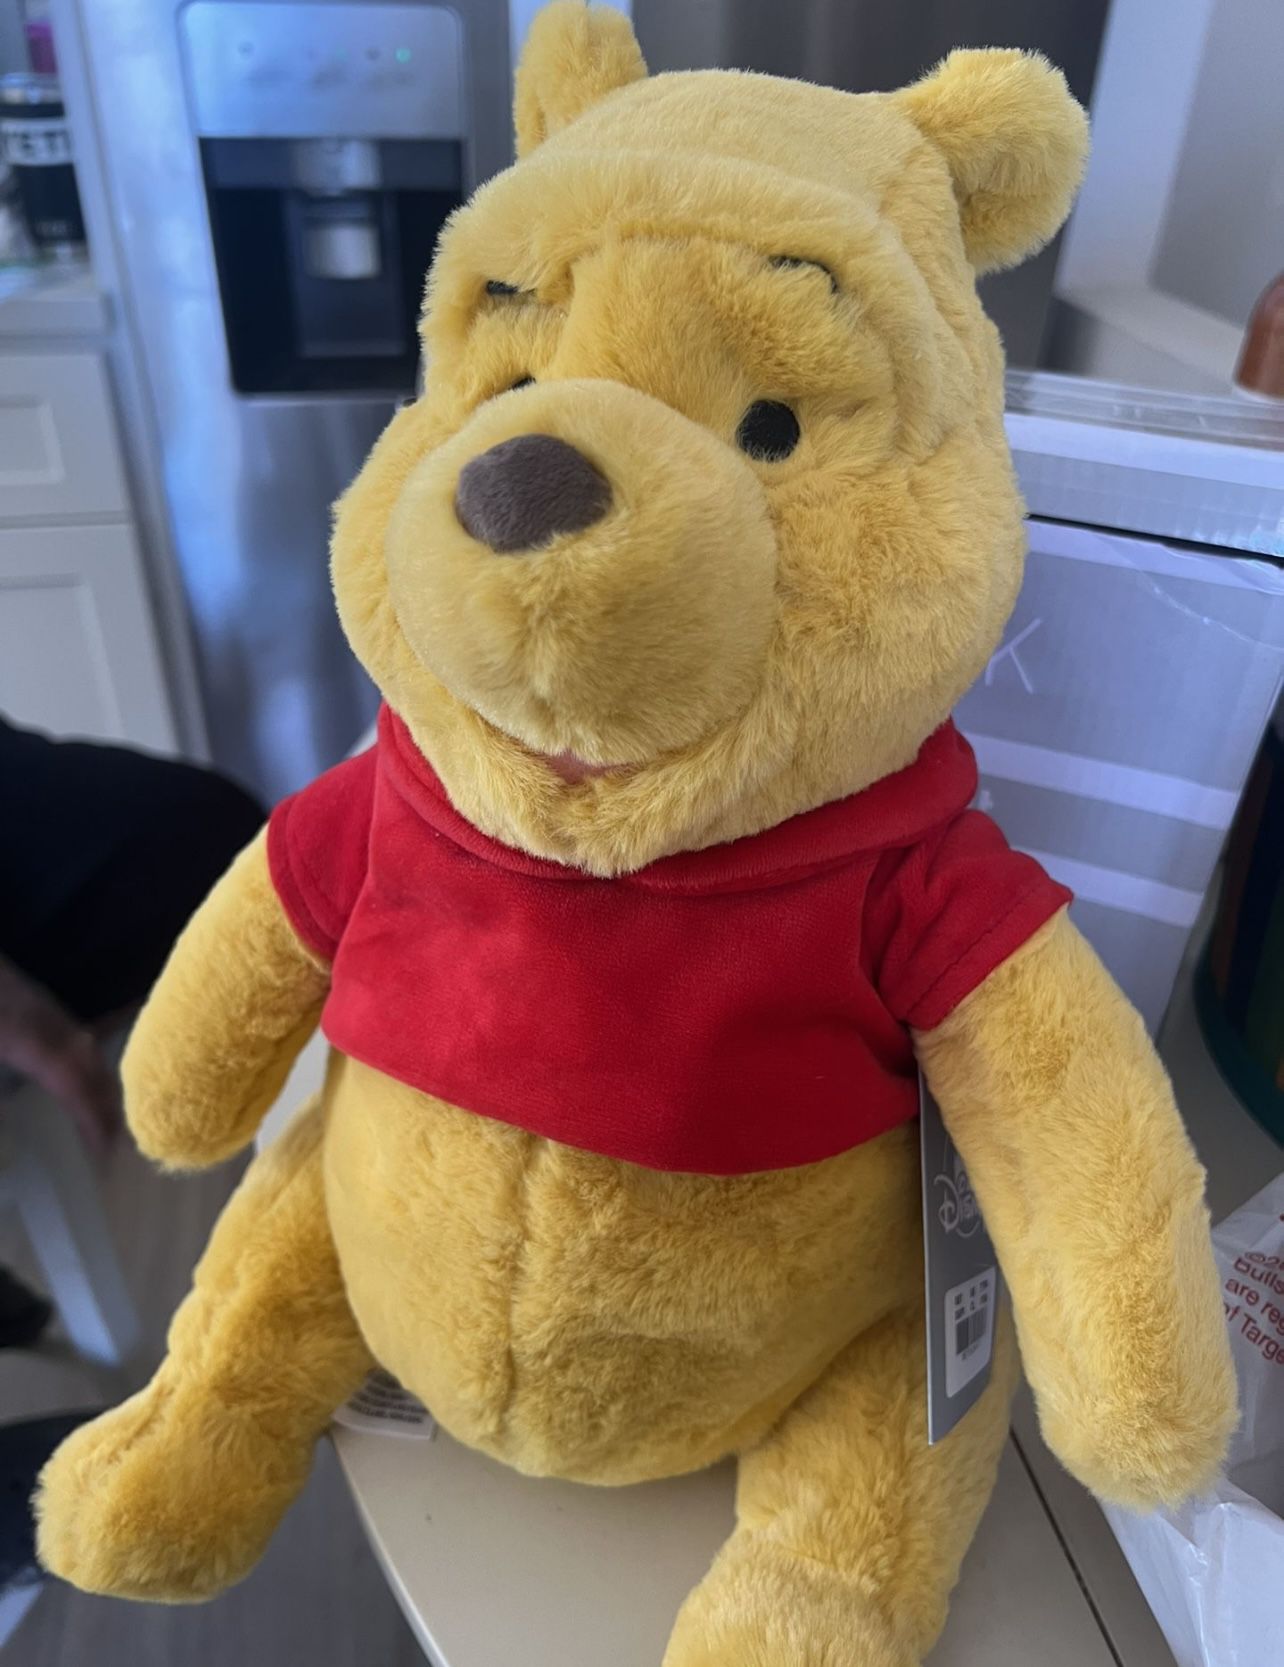 Winnie The Pooh Plush